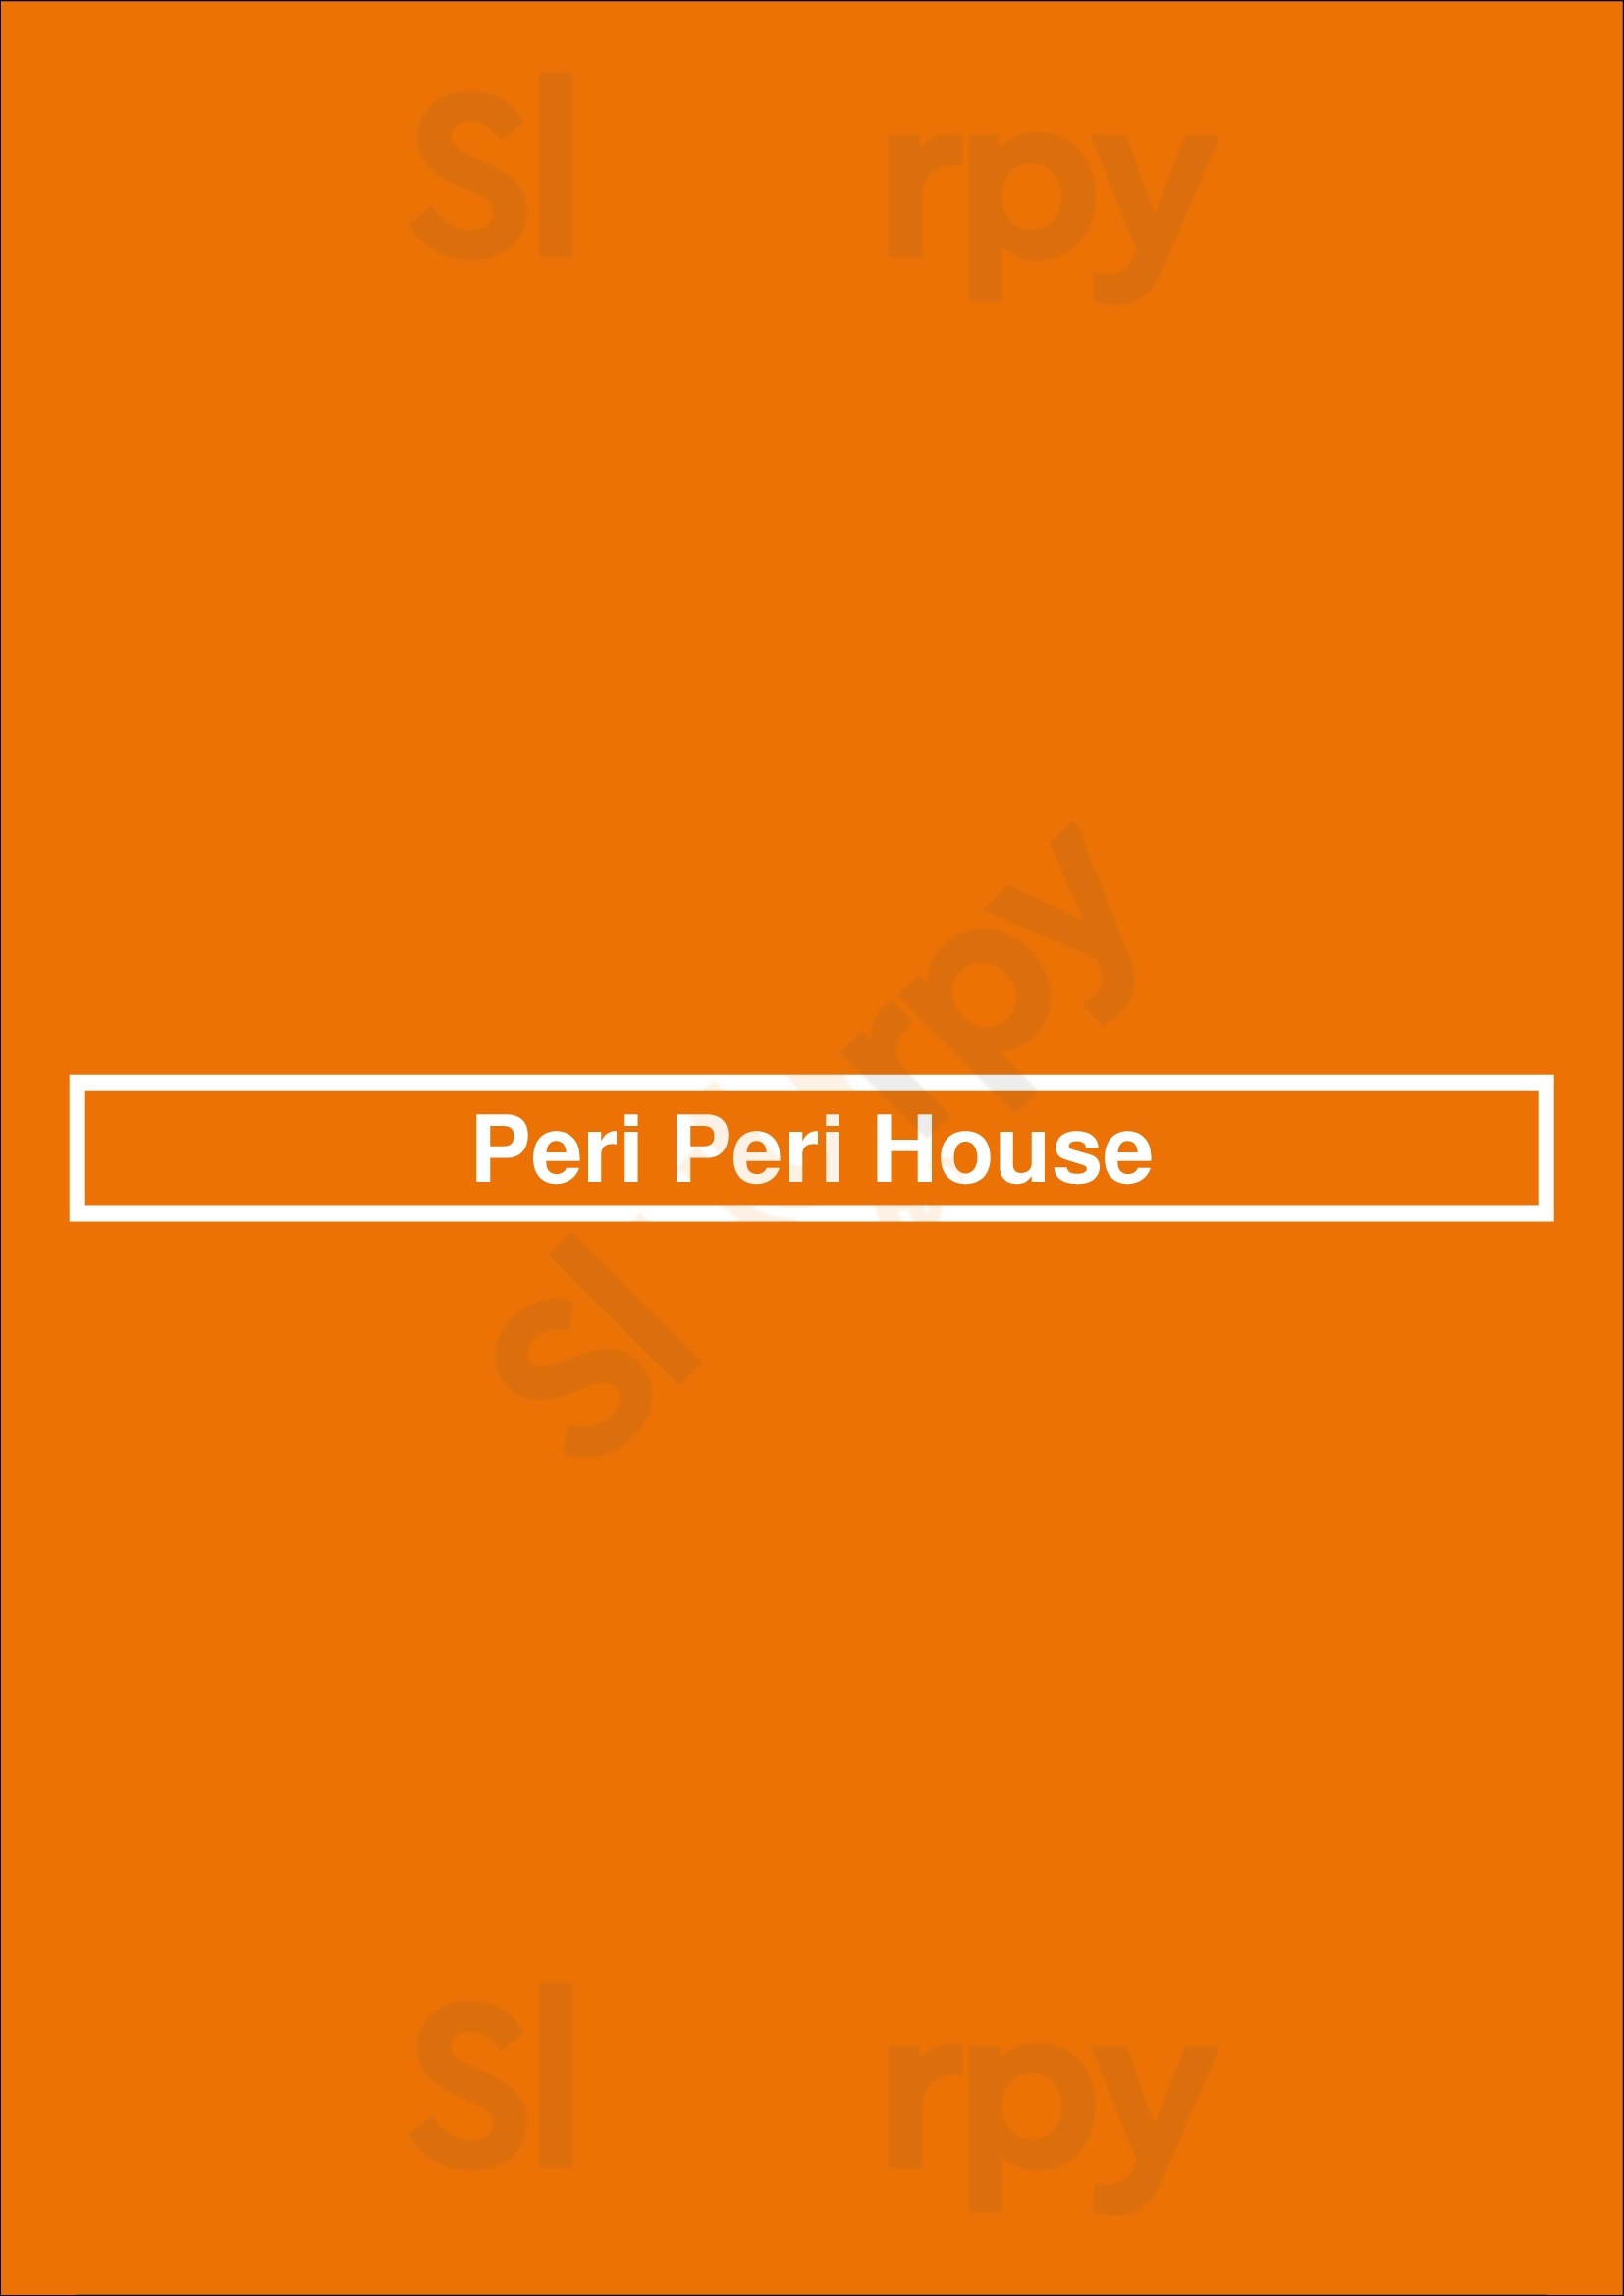 Peri Peri House Bognor Regis Menu - 1